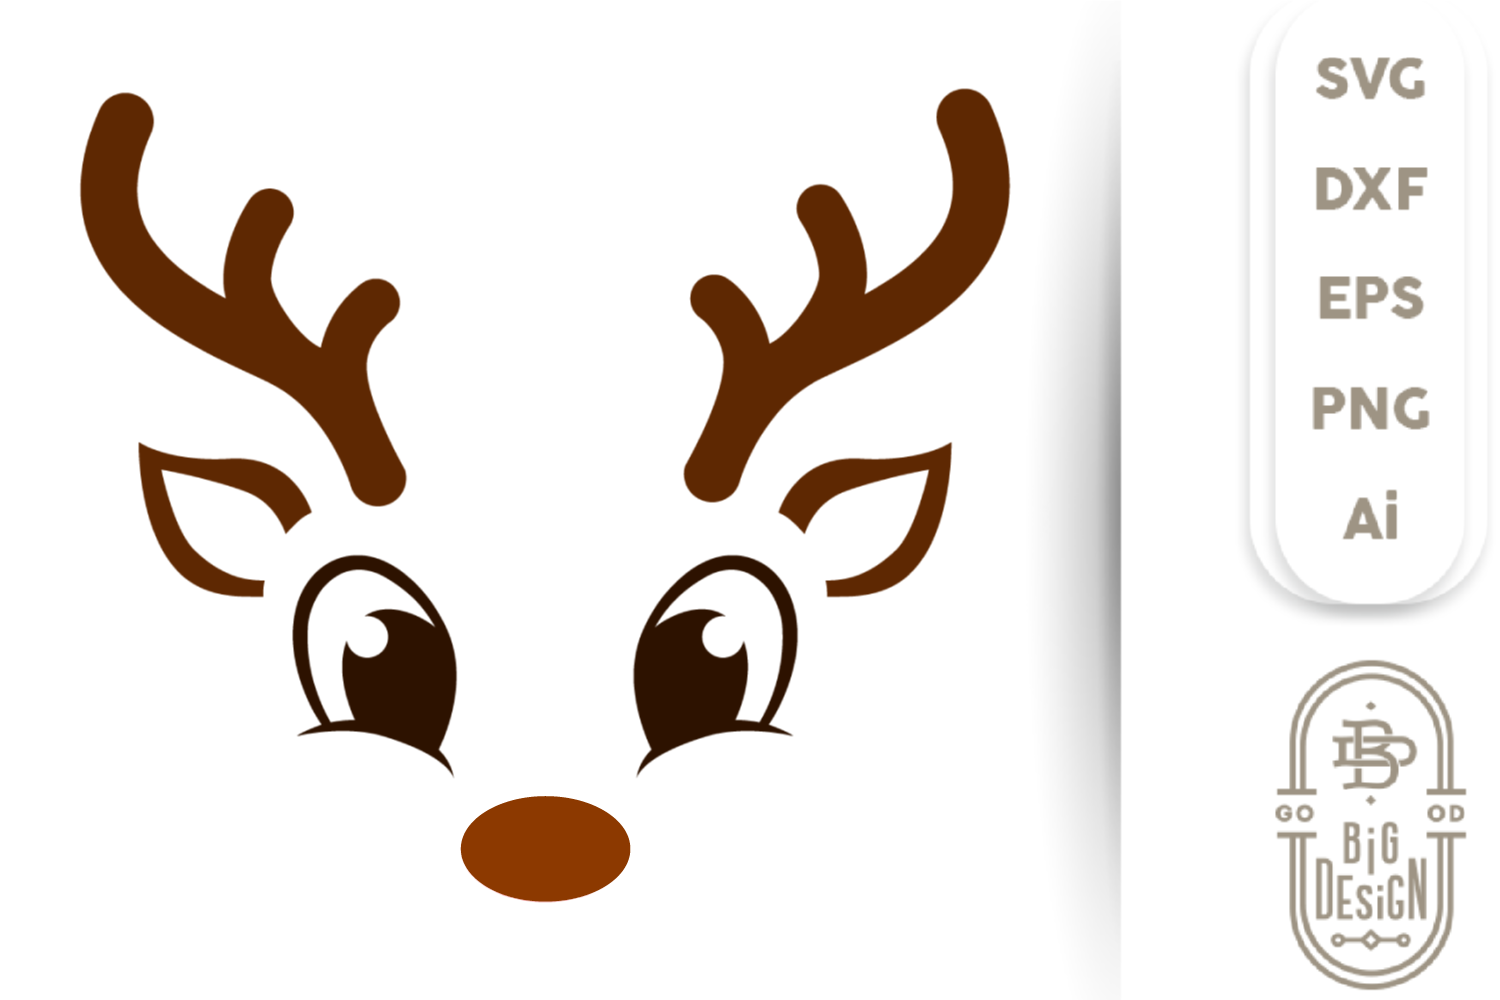 Christmas SVG Cute Reindeer SVG , Boy Reindeer face SVG By Big Design